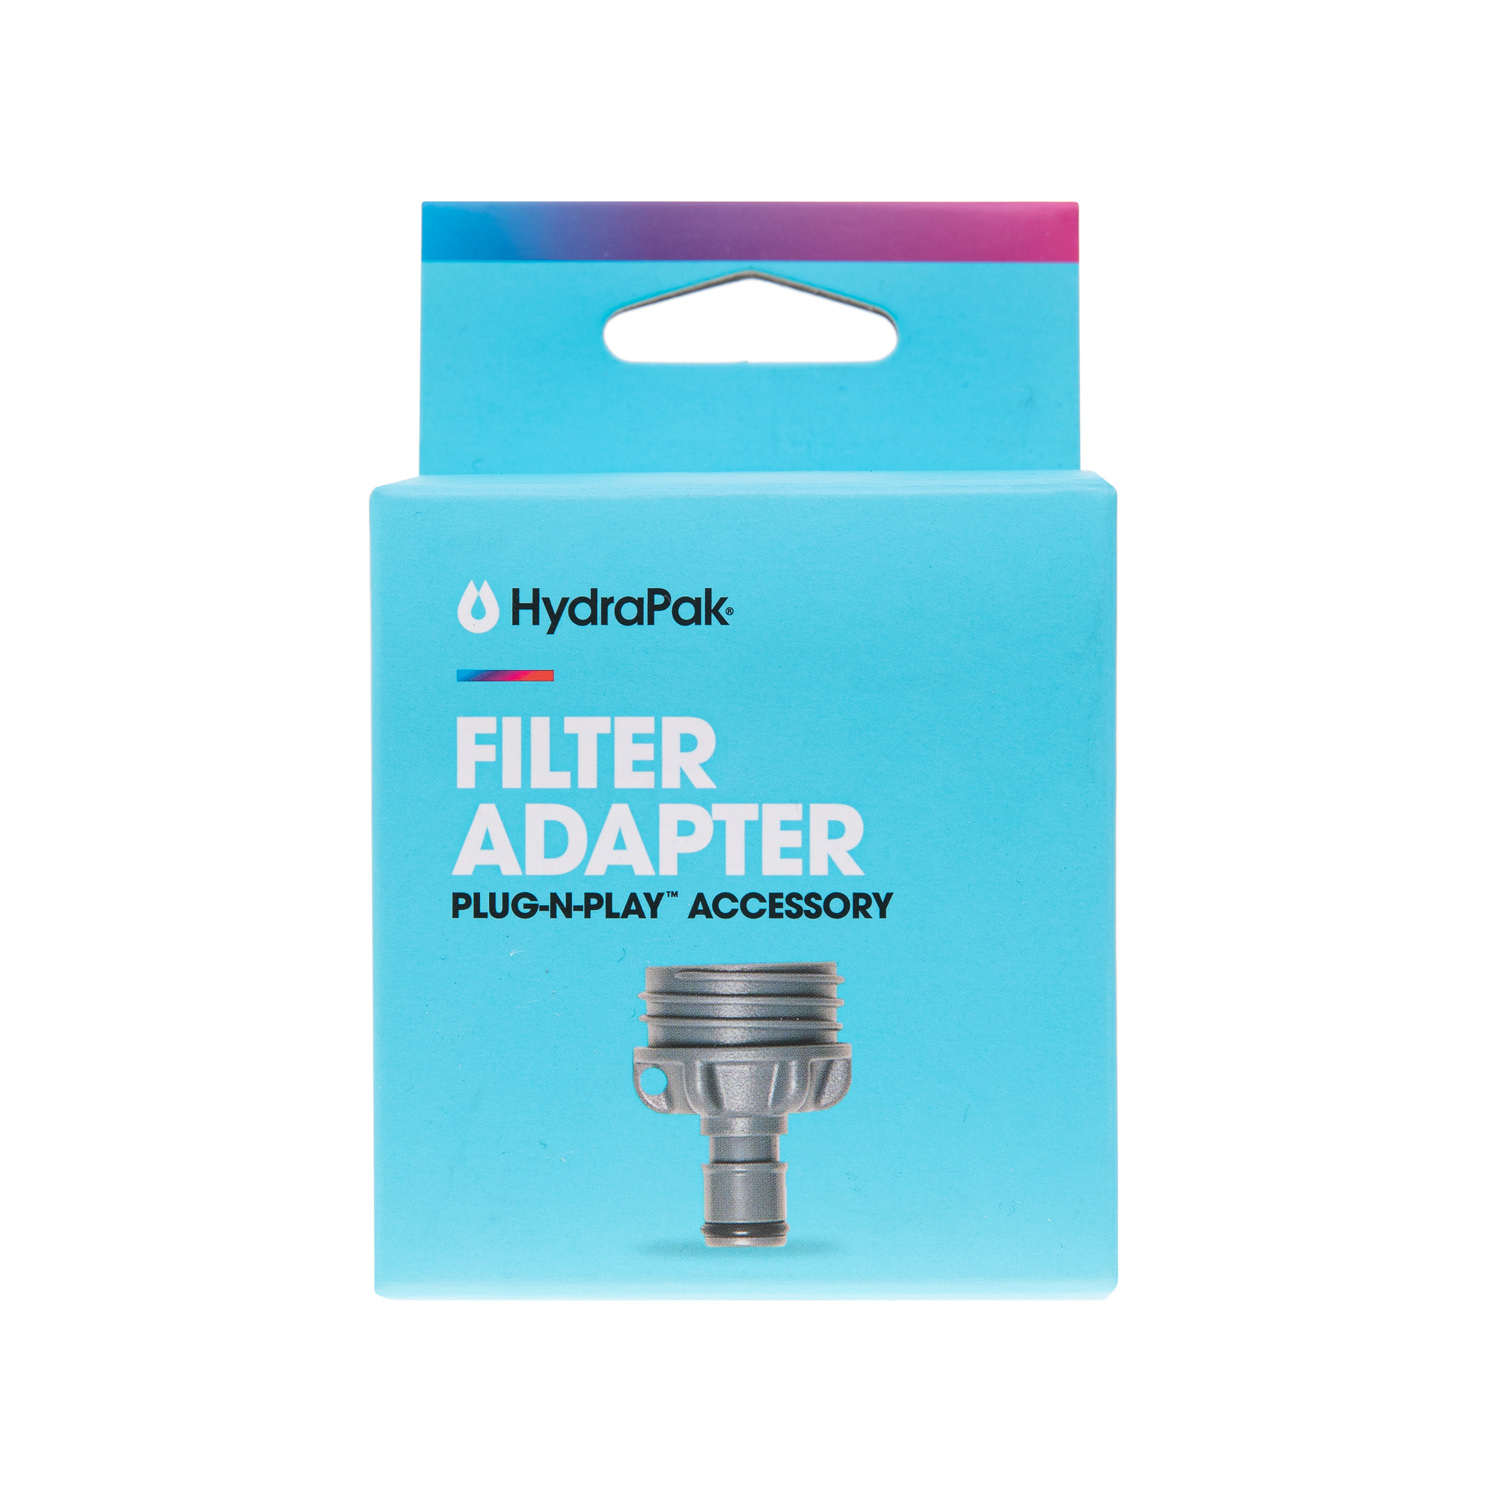 Переходник для фильтра HydraPak HydraPak Inline Filter 28 мм